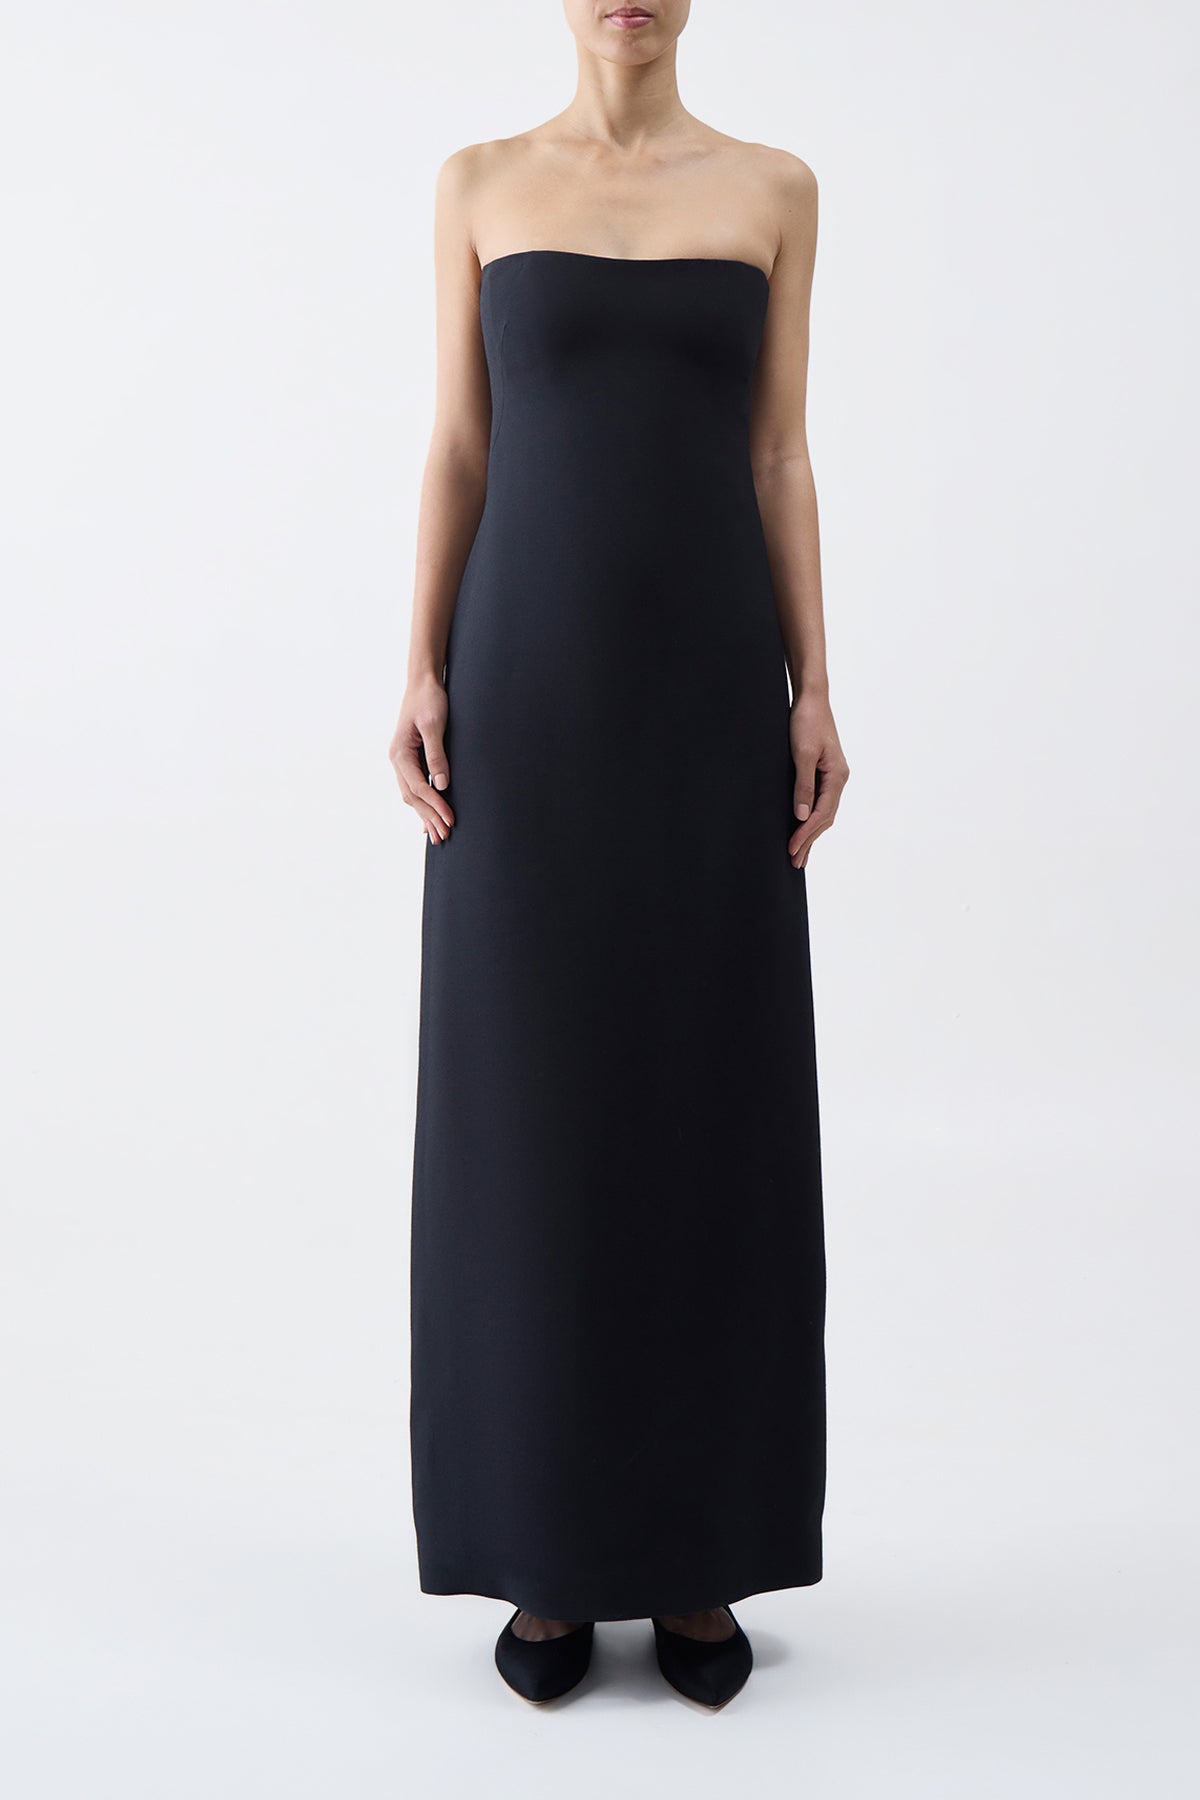 Opus Dress in Black Wool Silk Cady